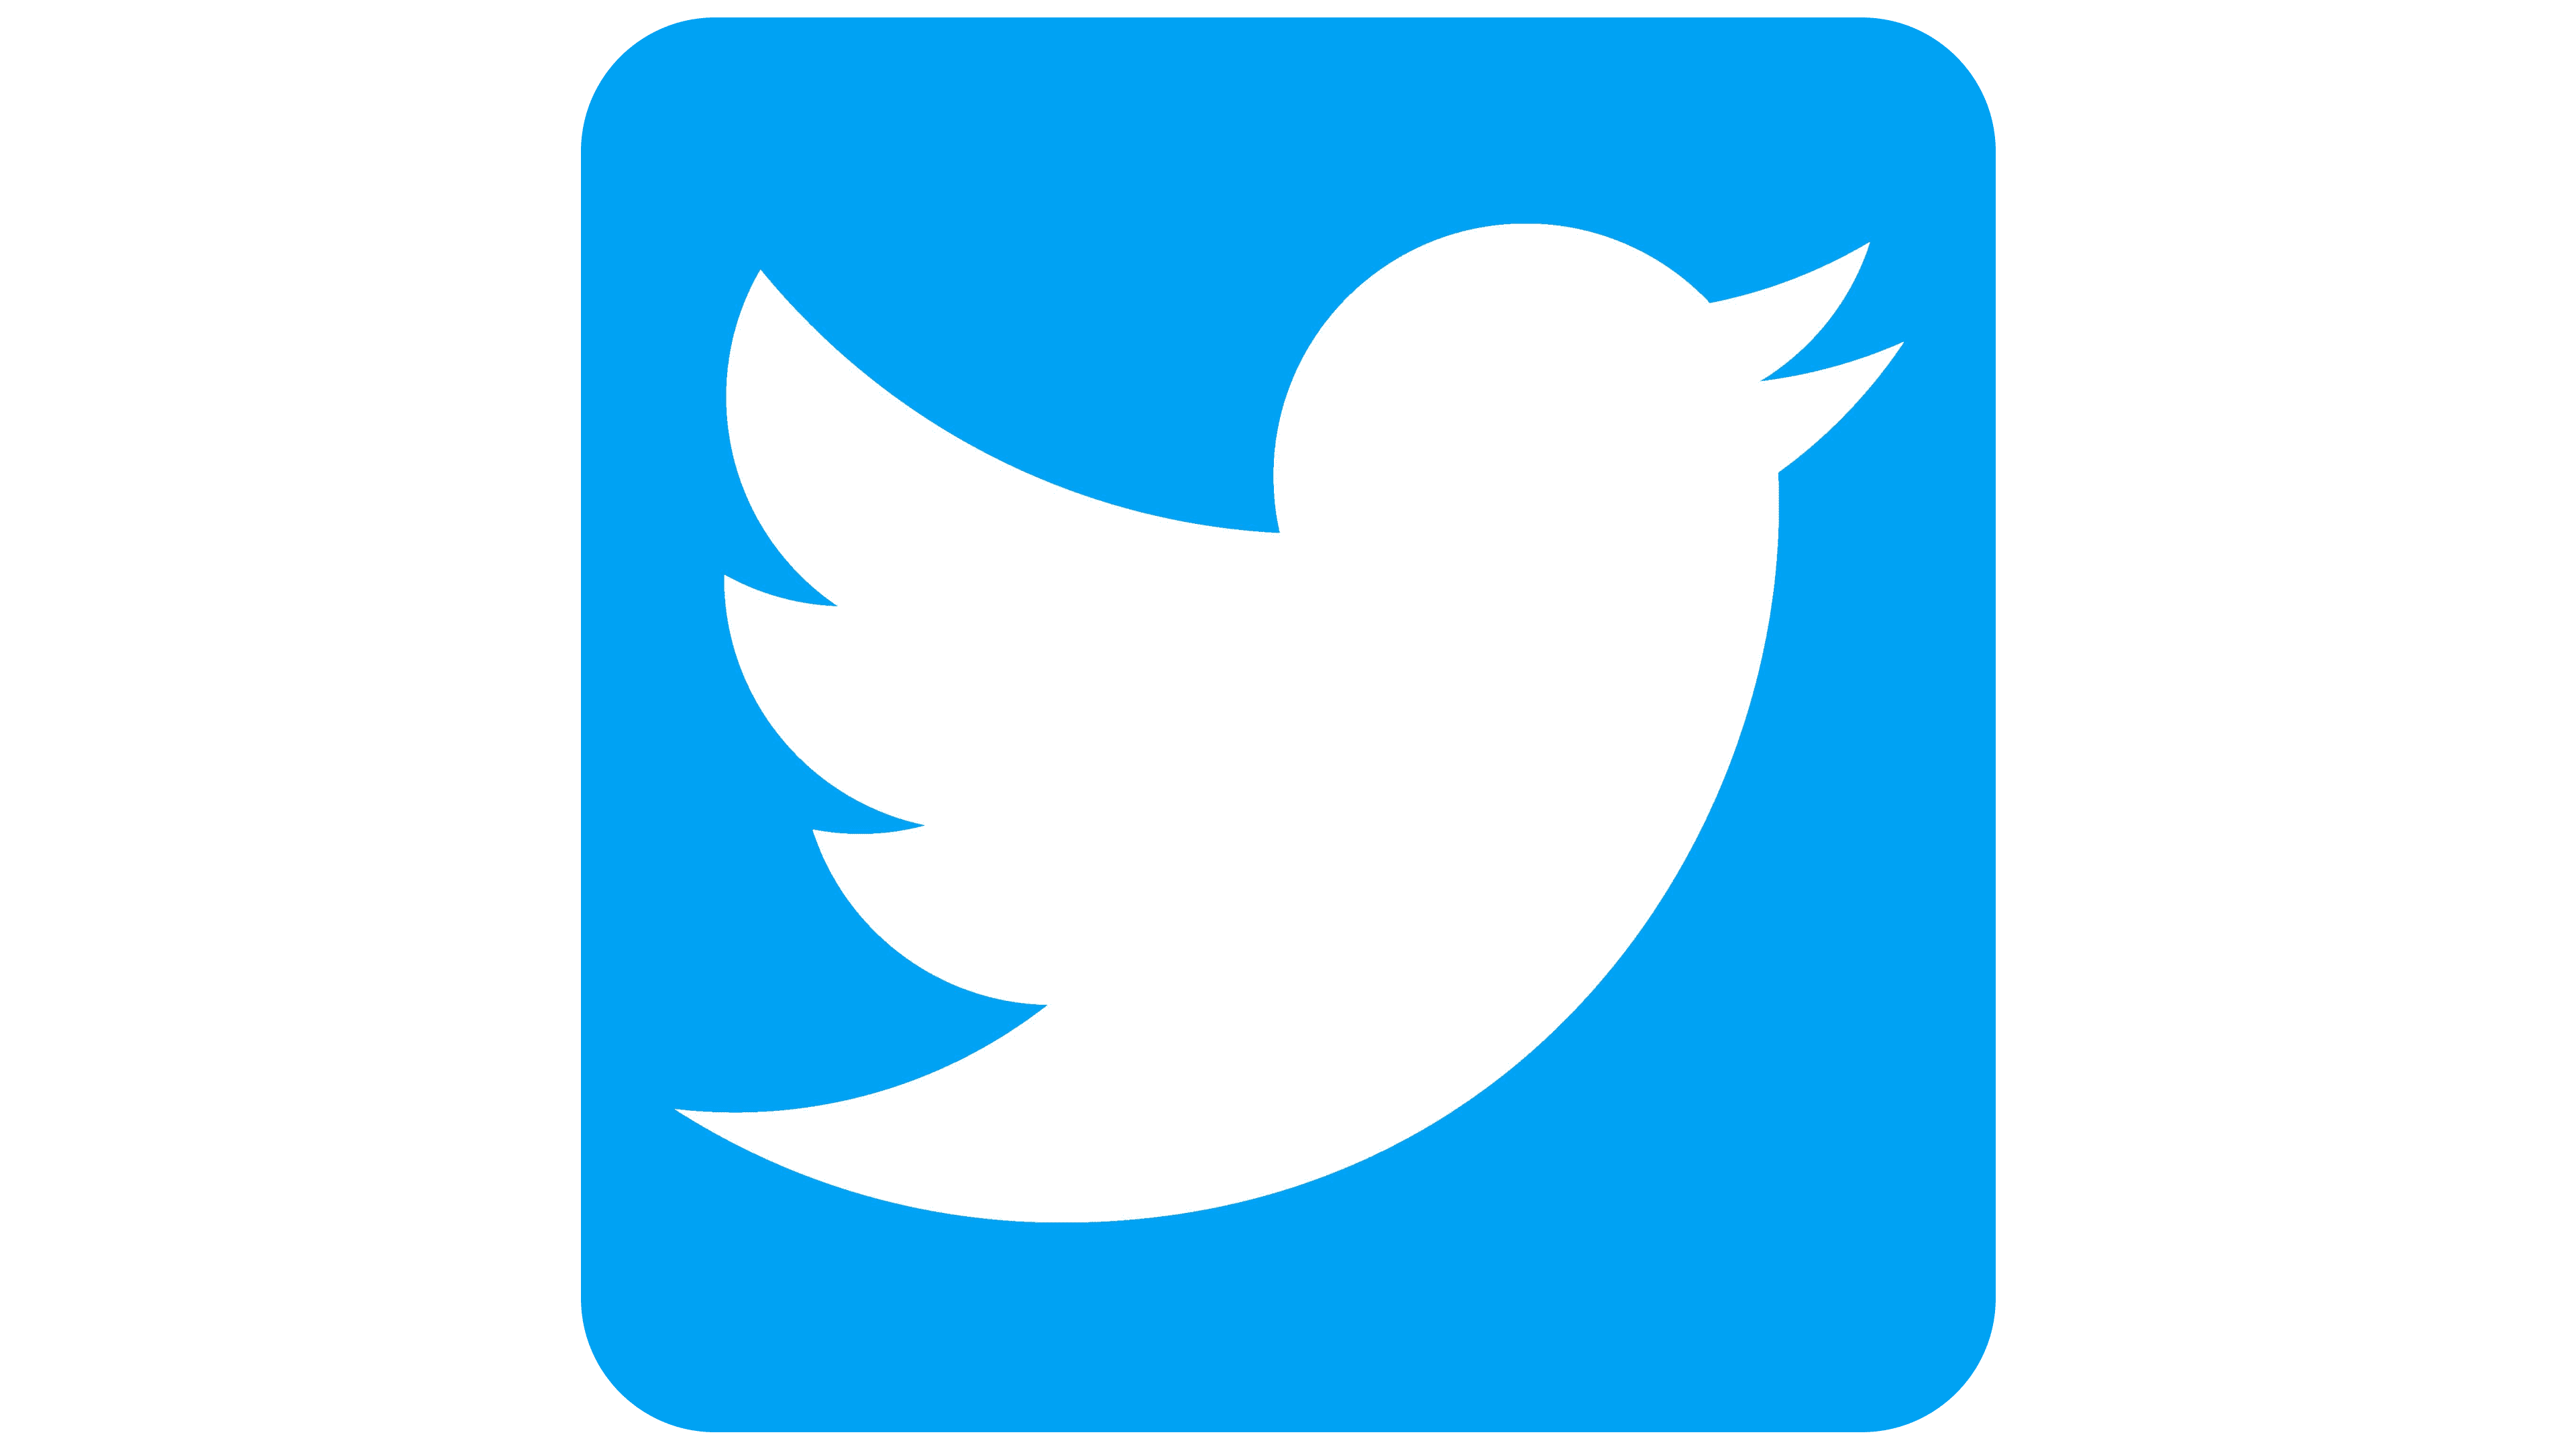 Twitter-Emblem.png